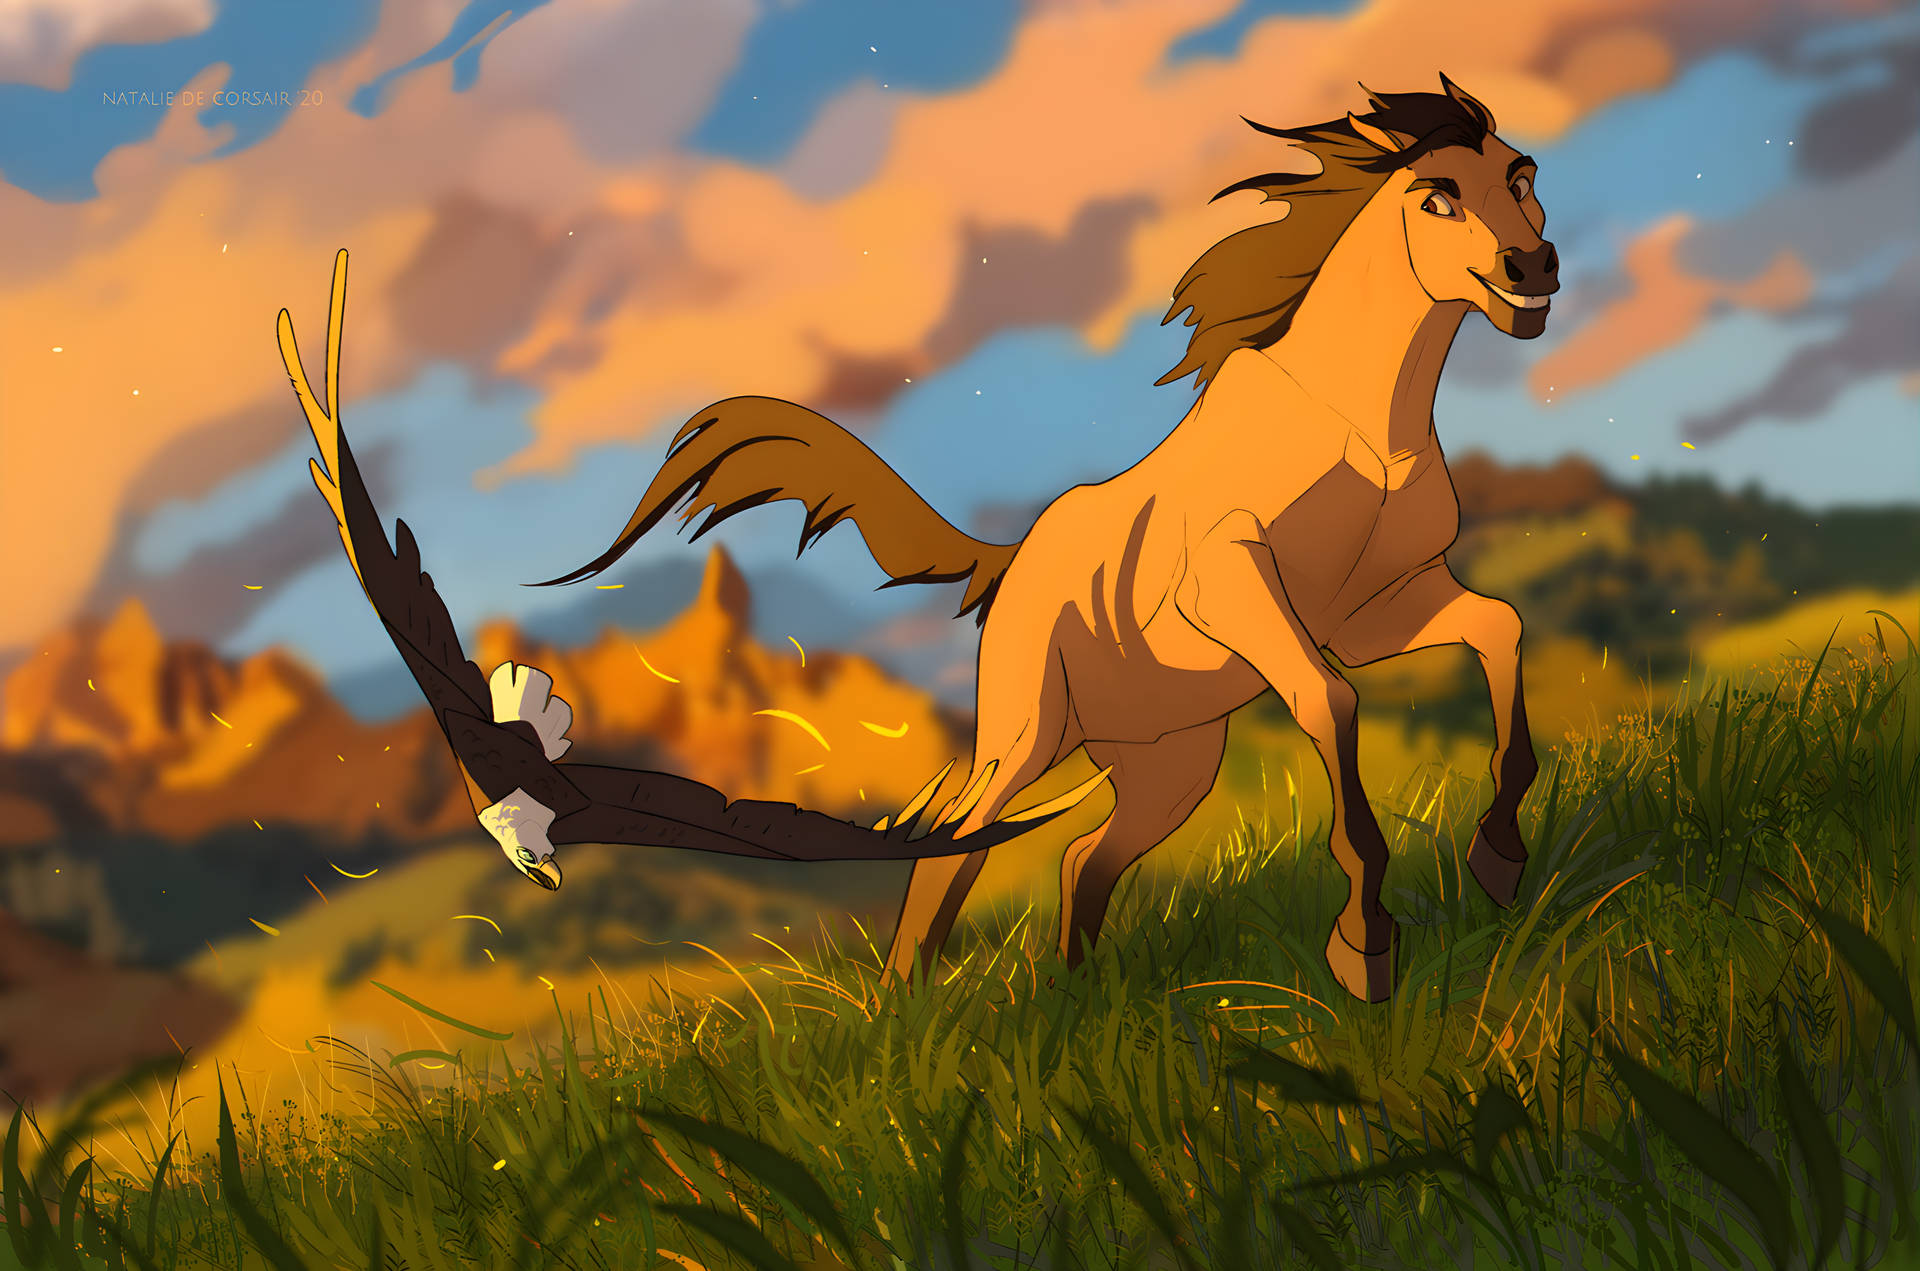 Spirit Stallion Of The Cimarron Galloping Through The Sunset Wallpaper